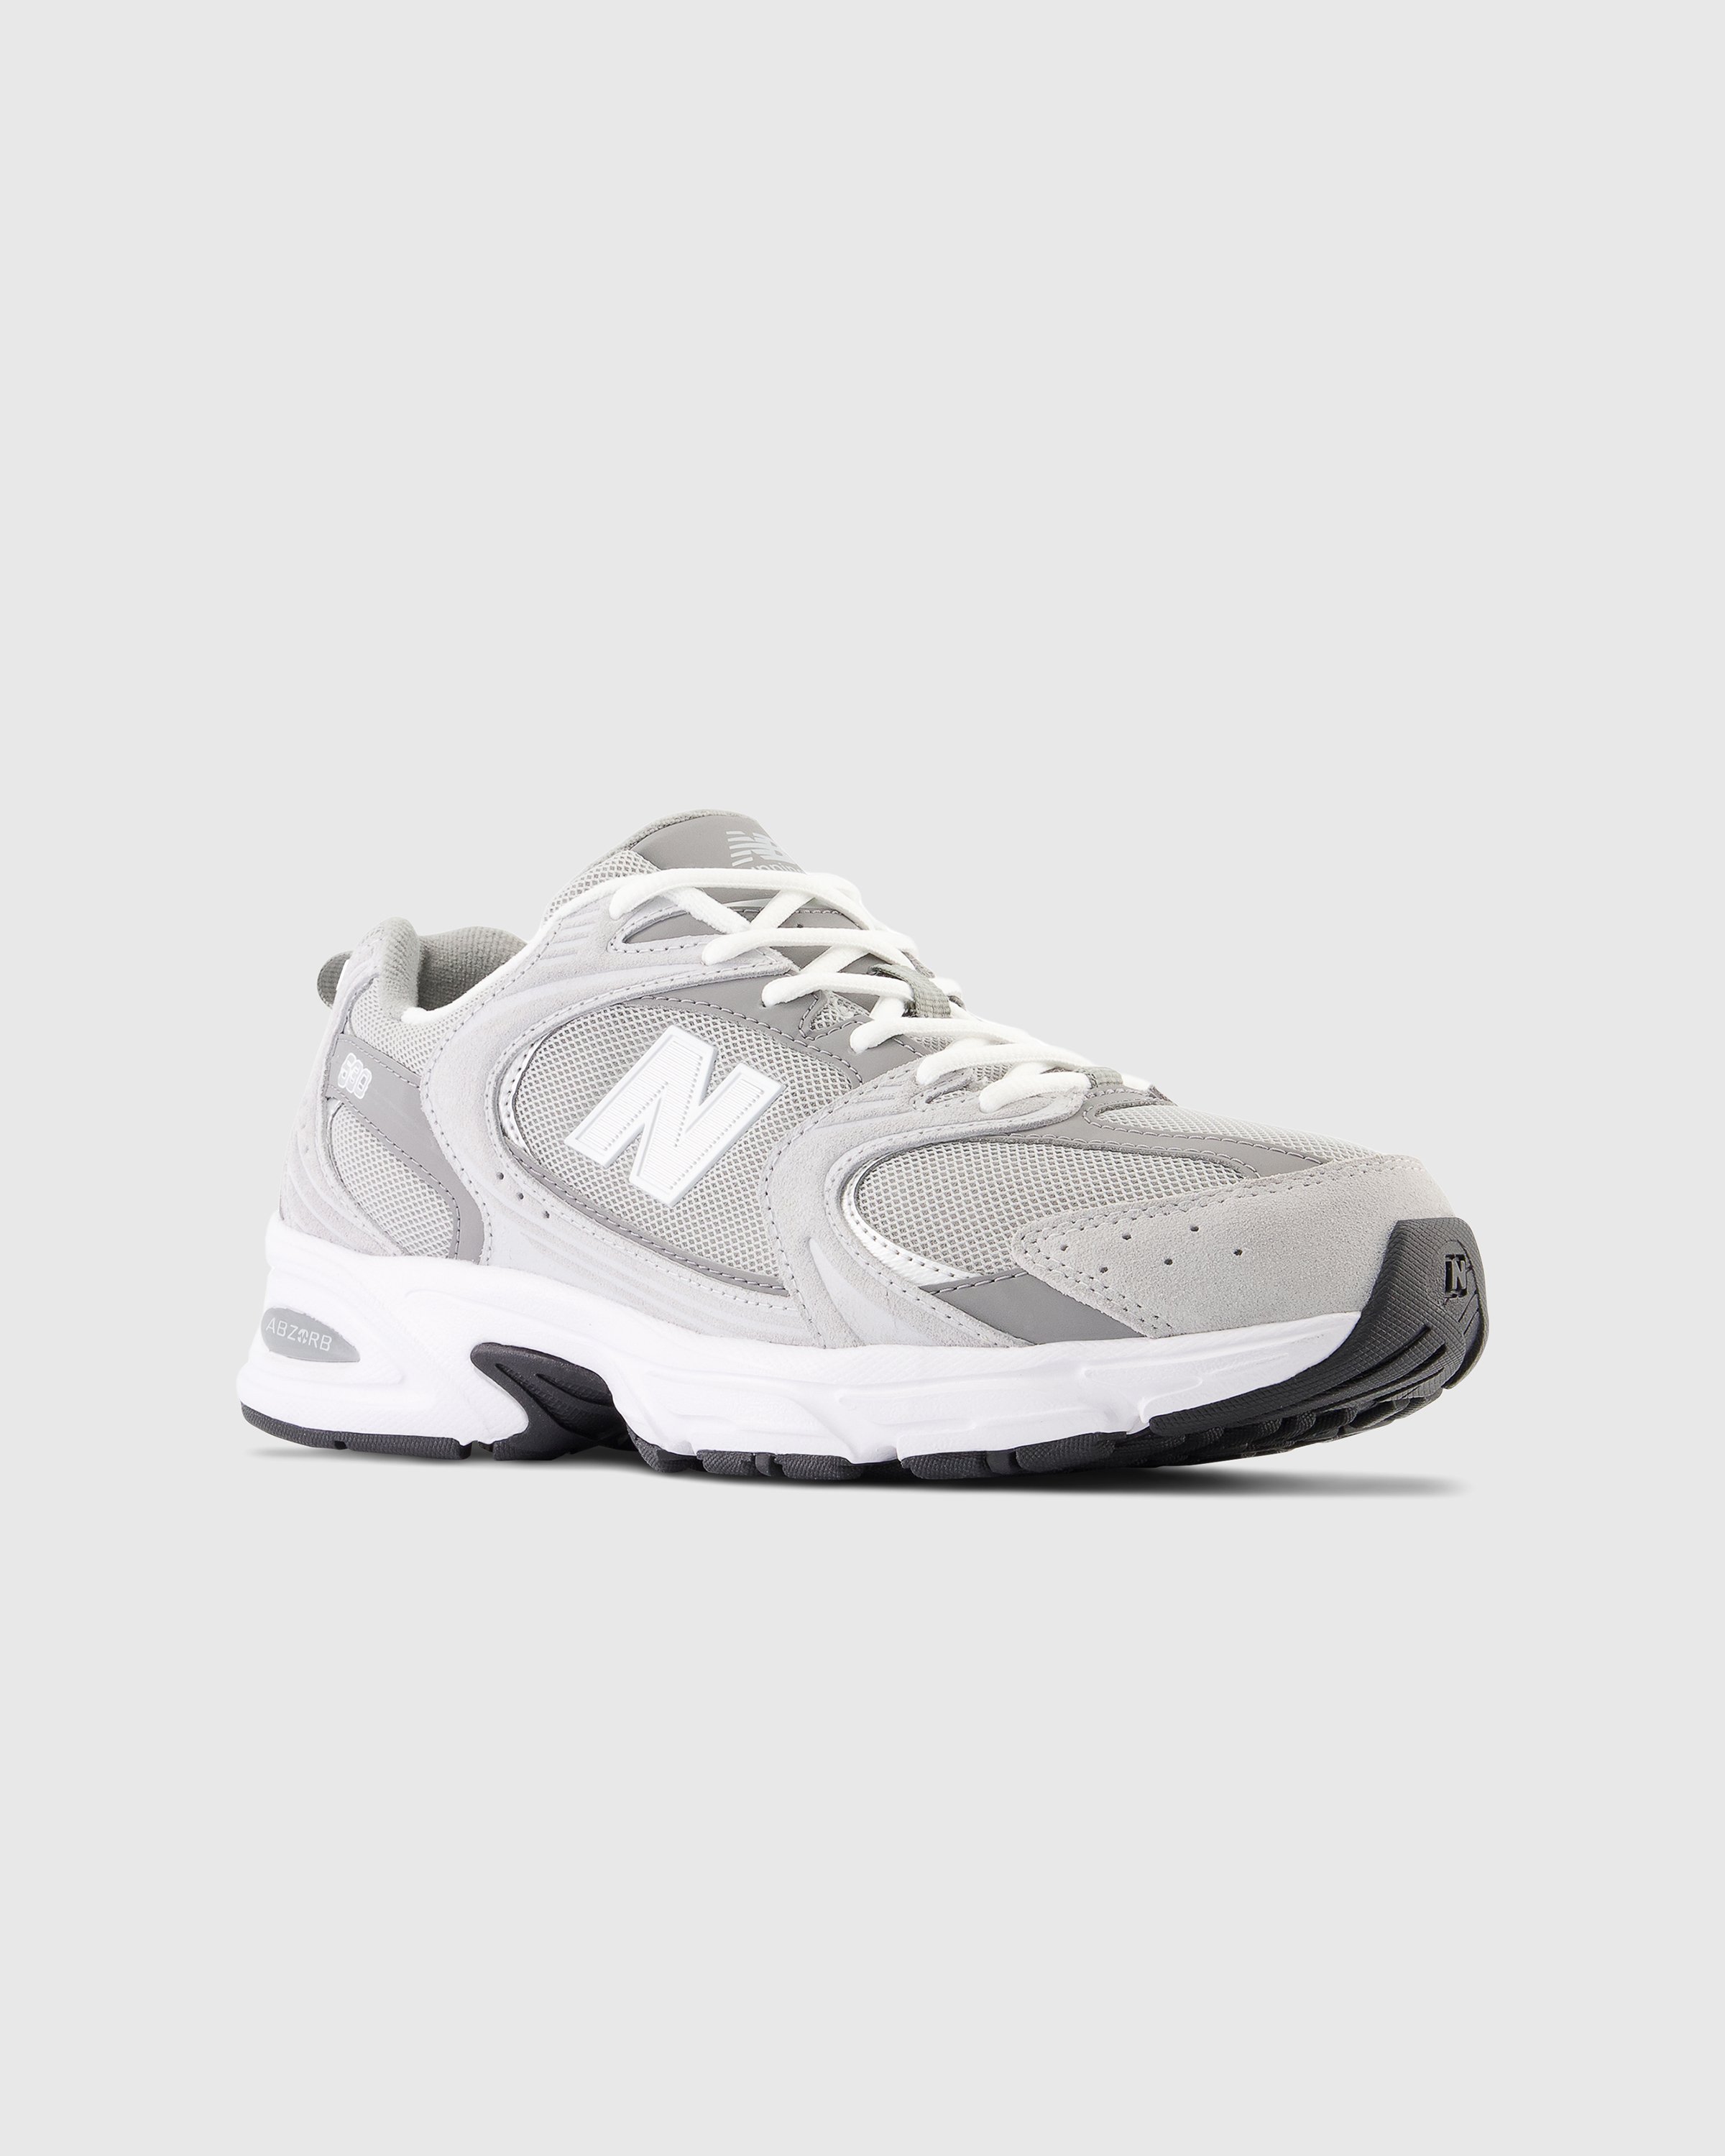 New Balance - MR530CK RAINCLOUD - Footwear - Grey - Image 3